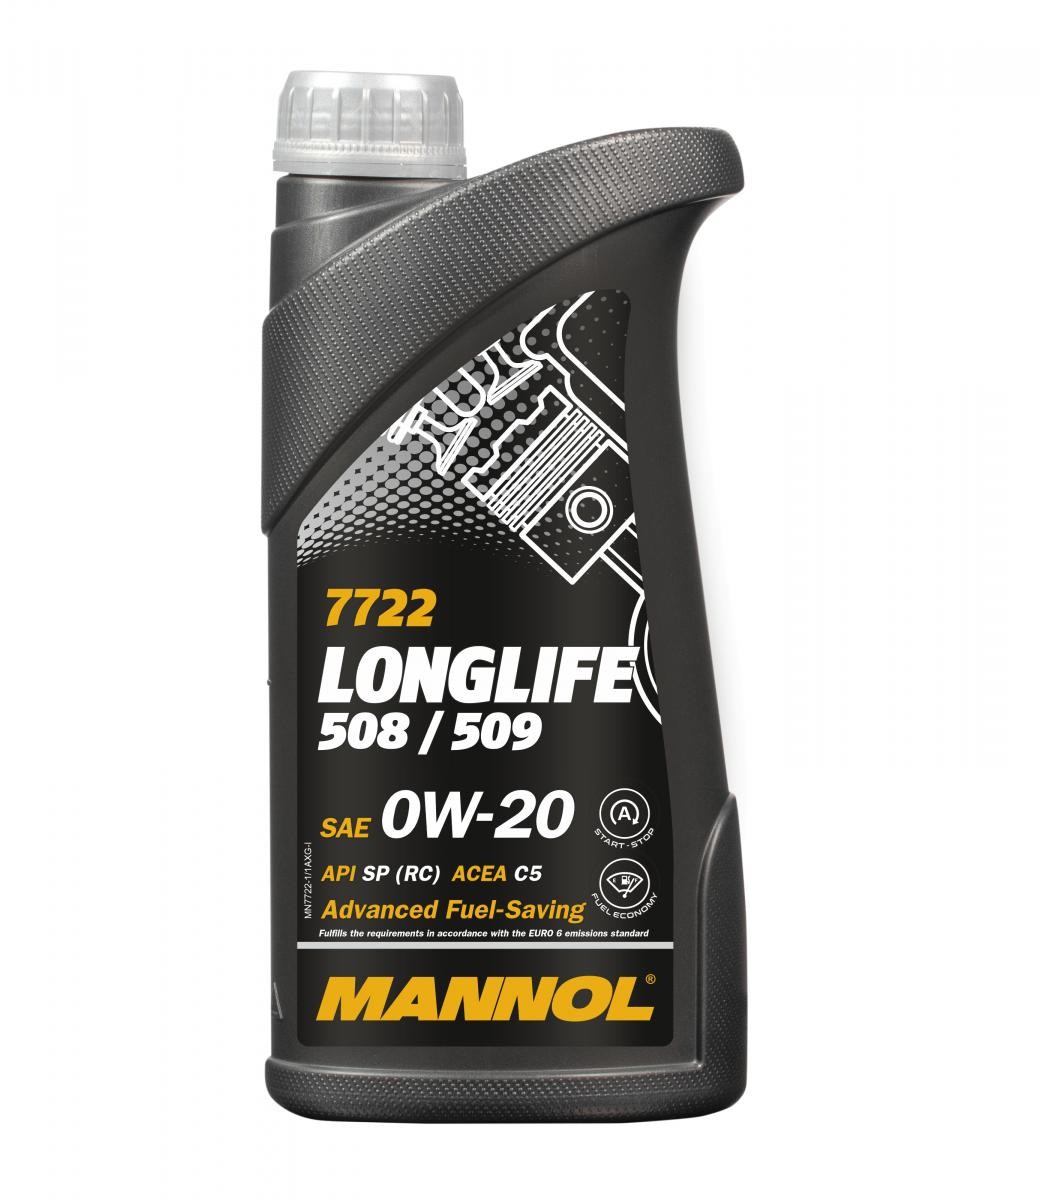 MANNOL Longlife 508/509 0W-20, 1l Motor oil MN7722-1 buy